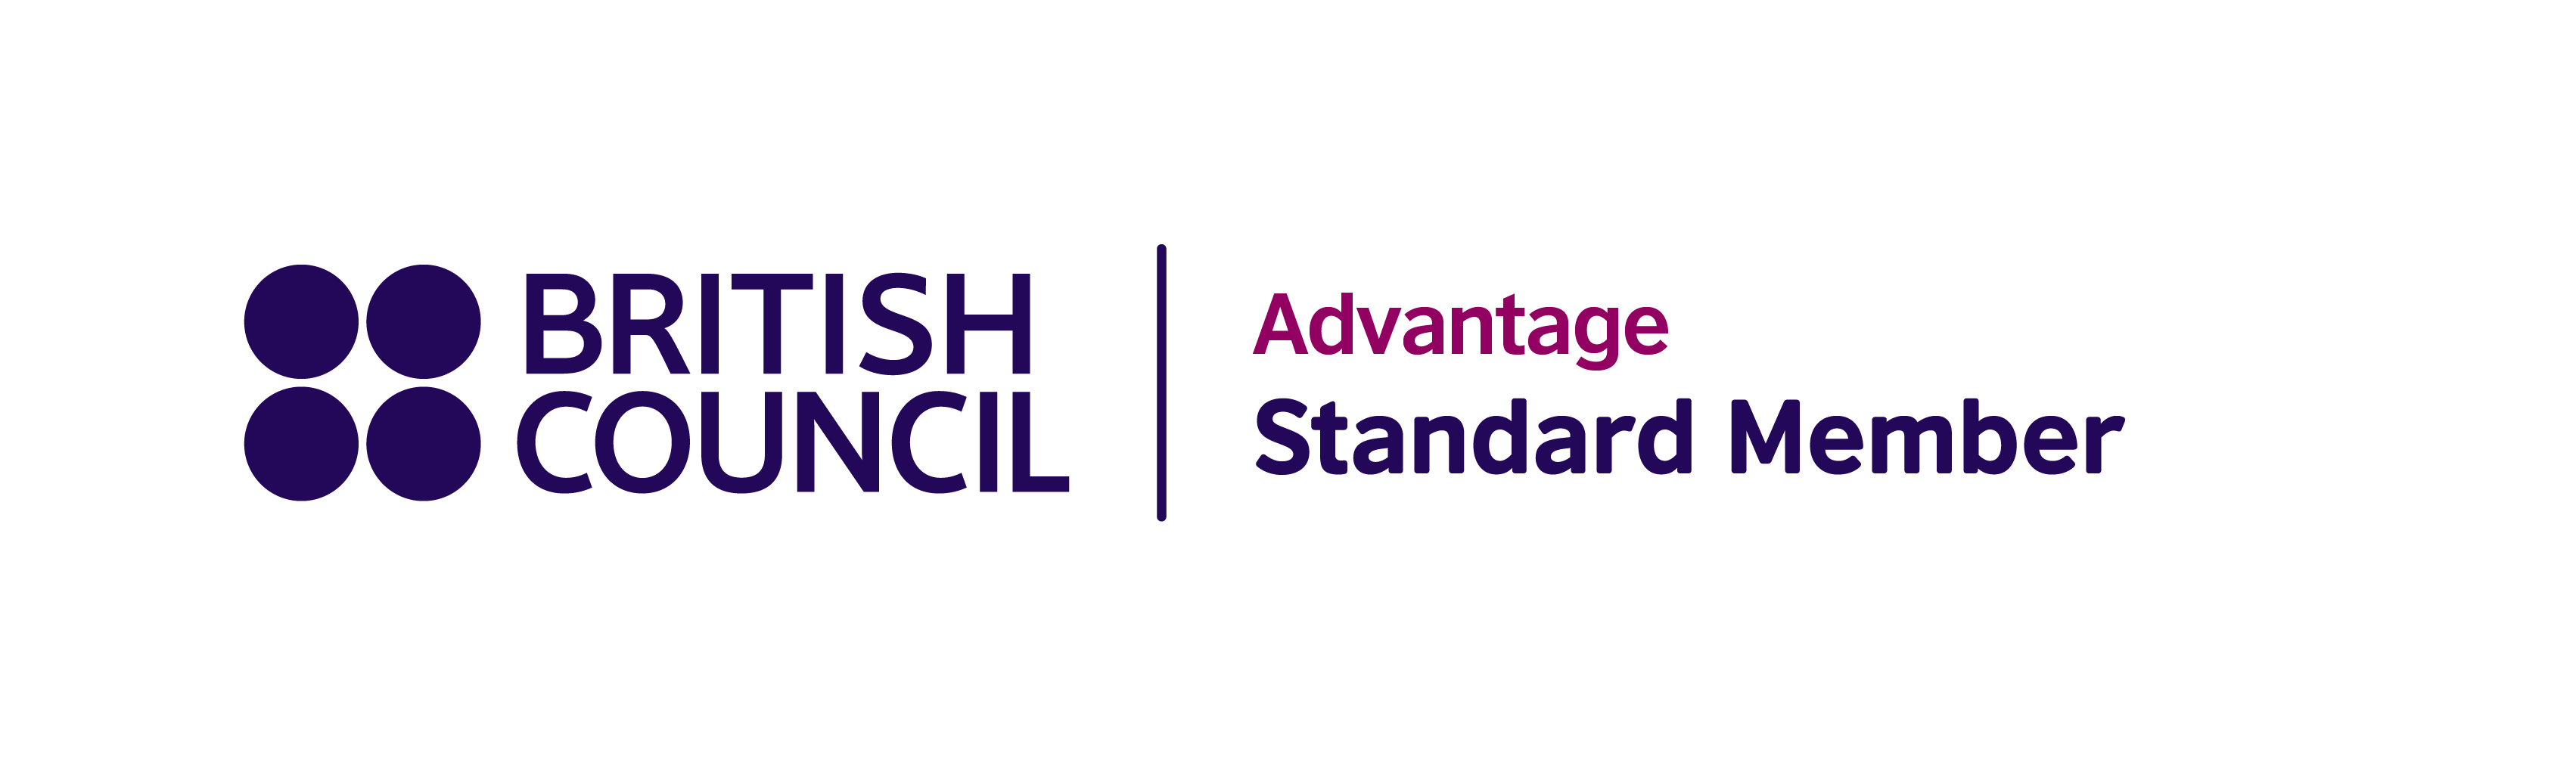 logo advantage badge primary standard member